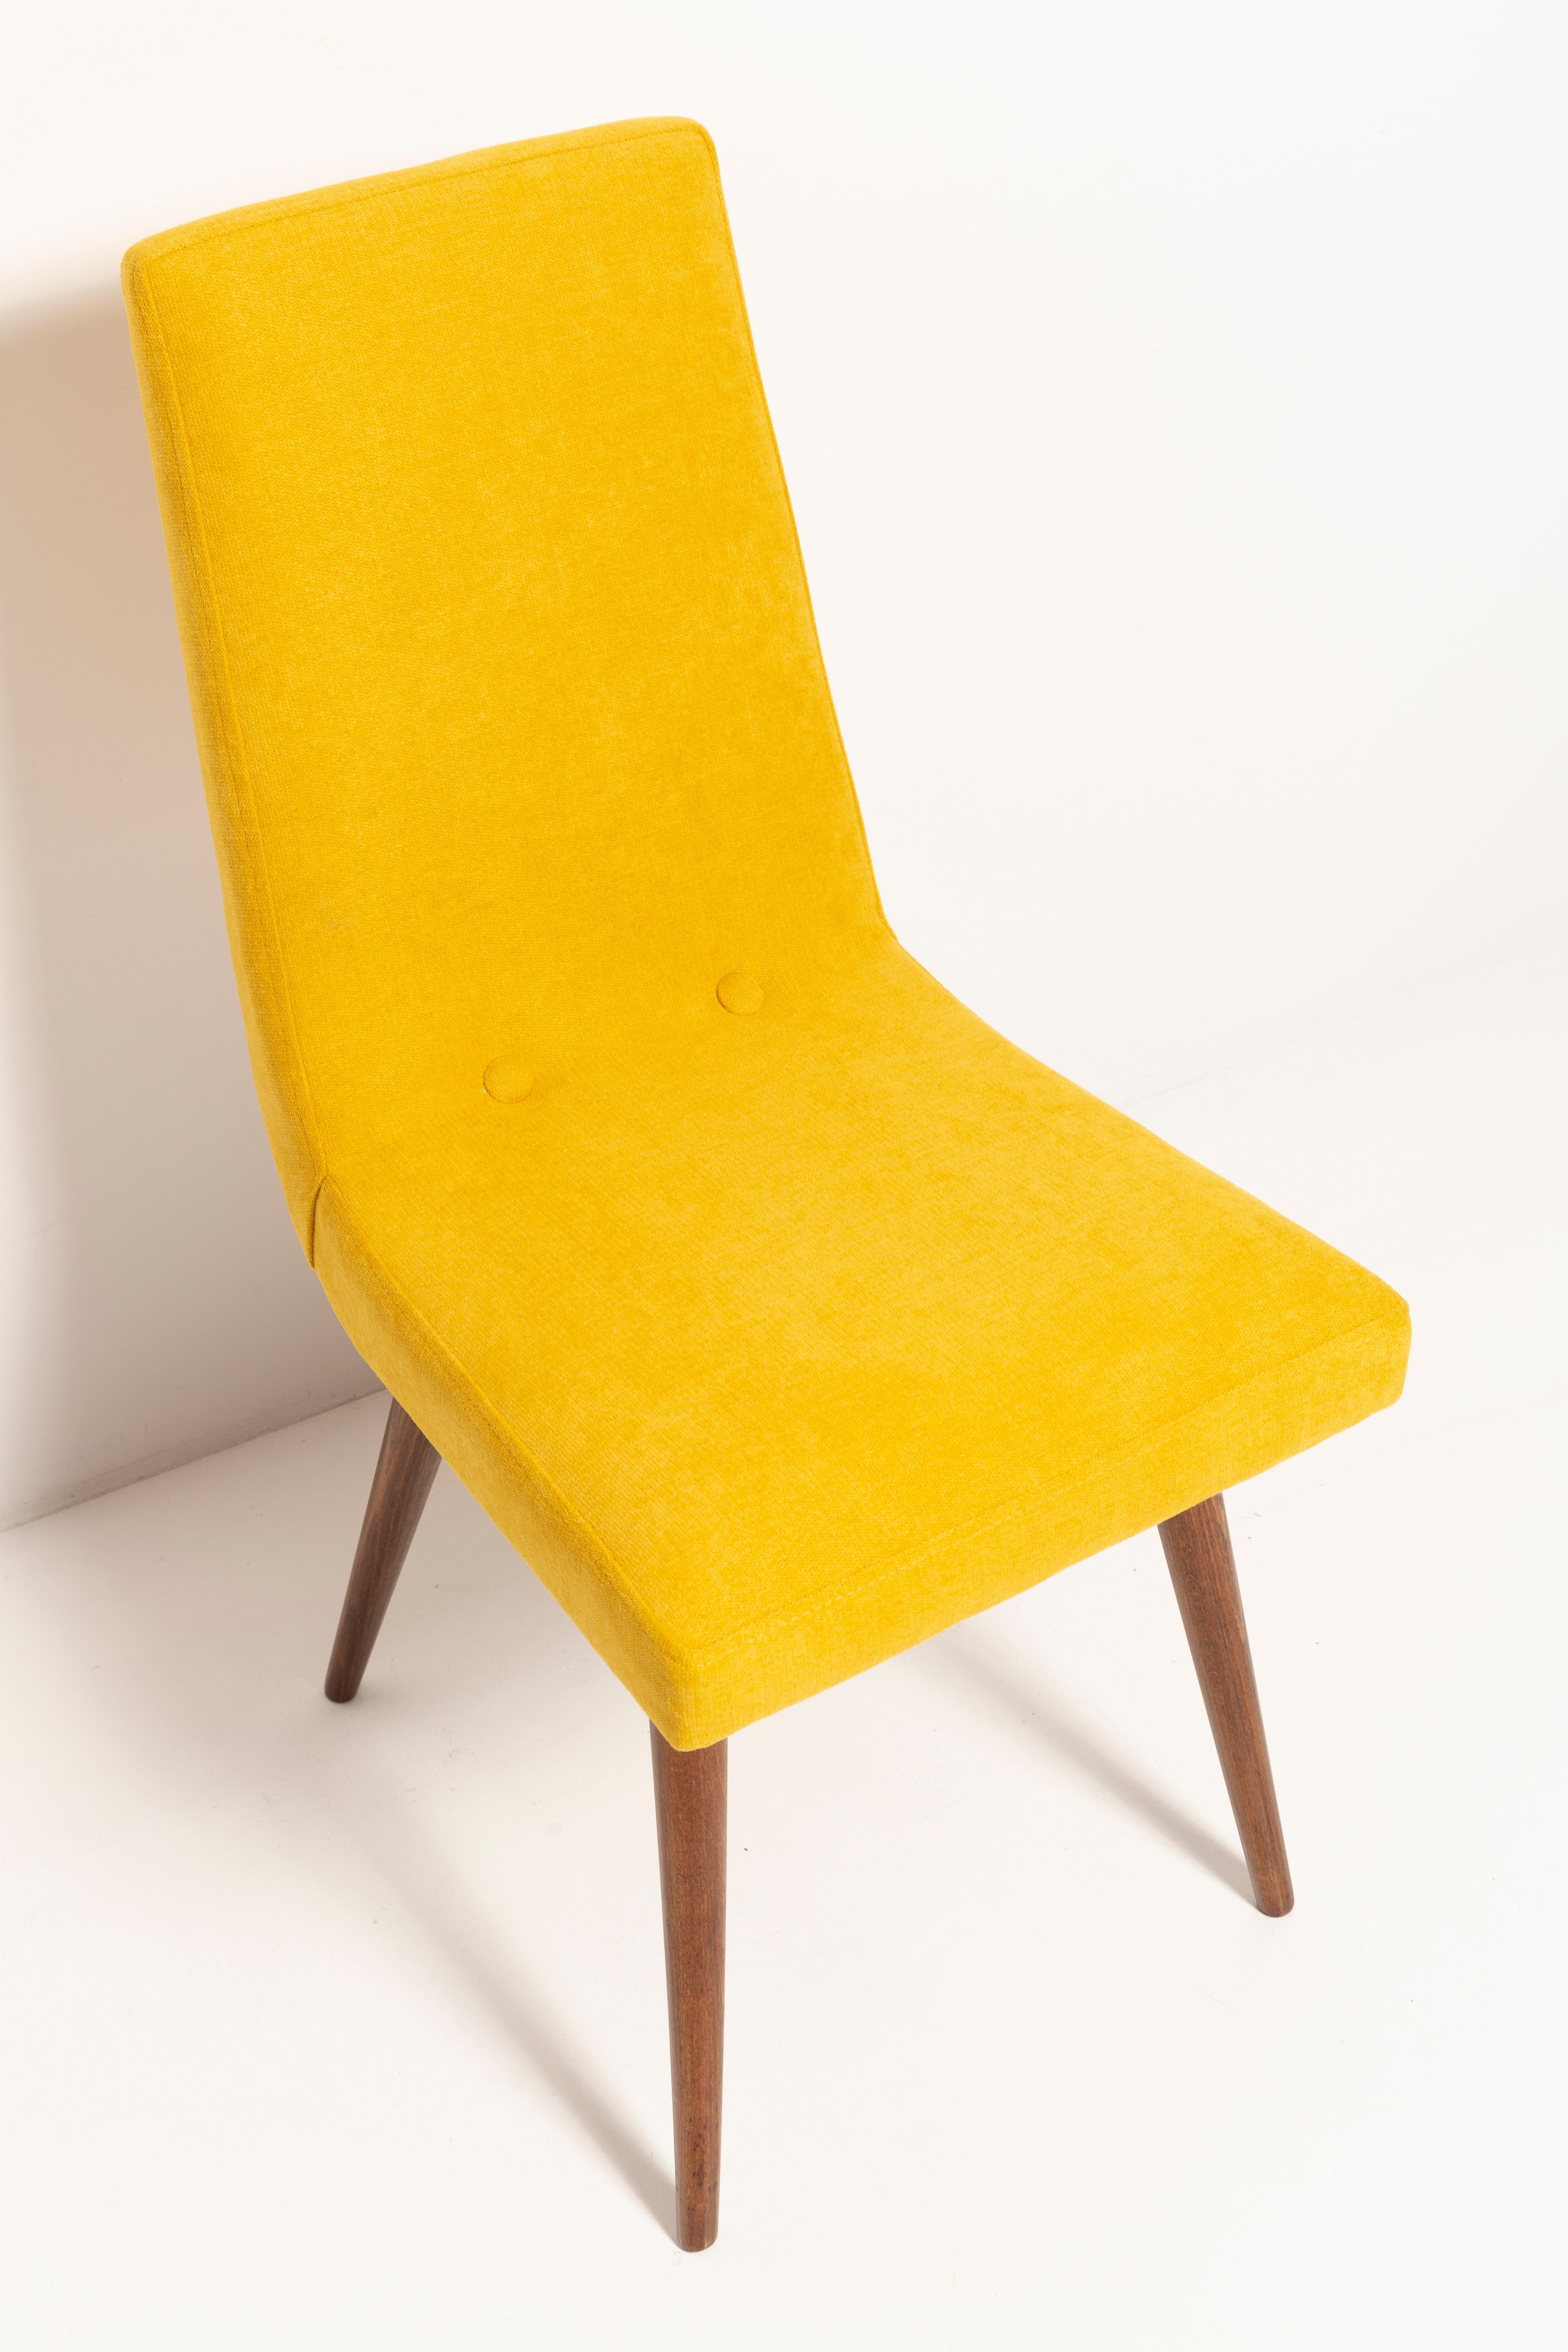 20th Century Mustard Yellow Wool Chair, Rajmund Halas, Europe, 1960s For Sale 5